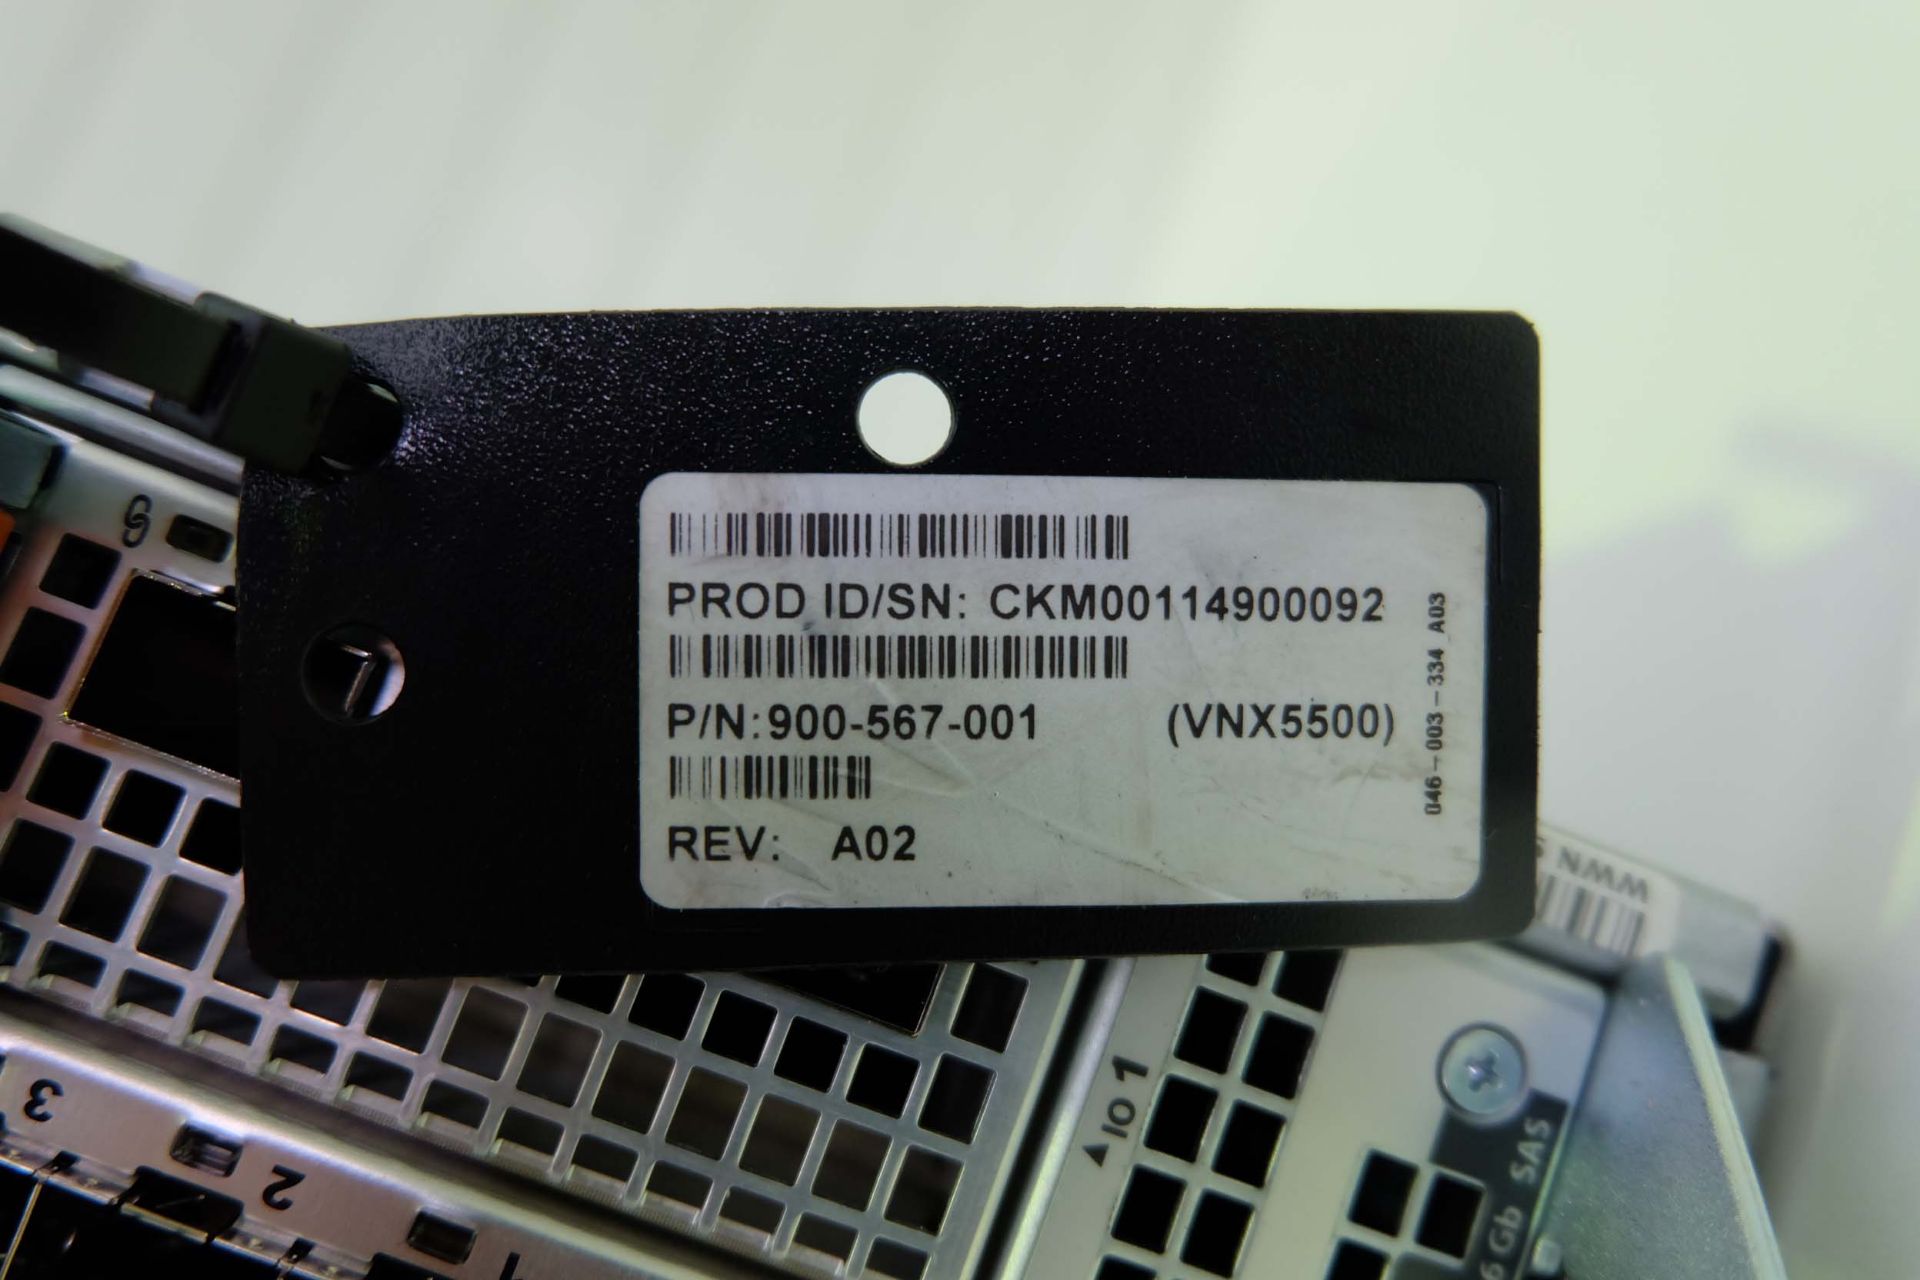 EMC2 Corp Model STPE 15 VNX 5500 SAN Rack Mountable 15 Bay Disk Array/Enclosure. (No HDD's). - Image 5 of 12